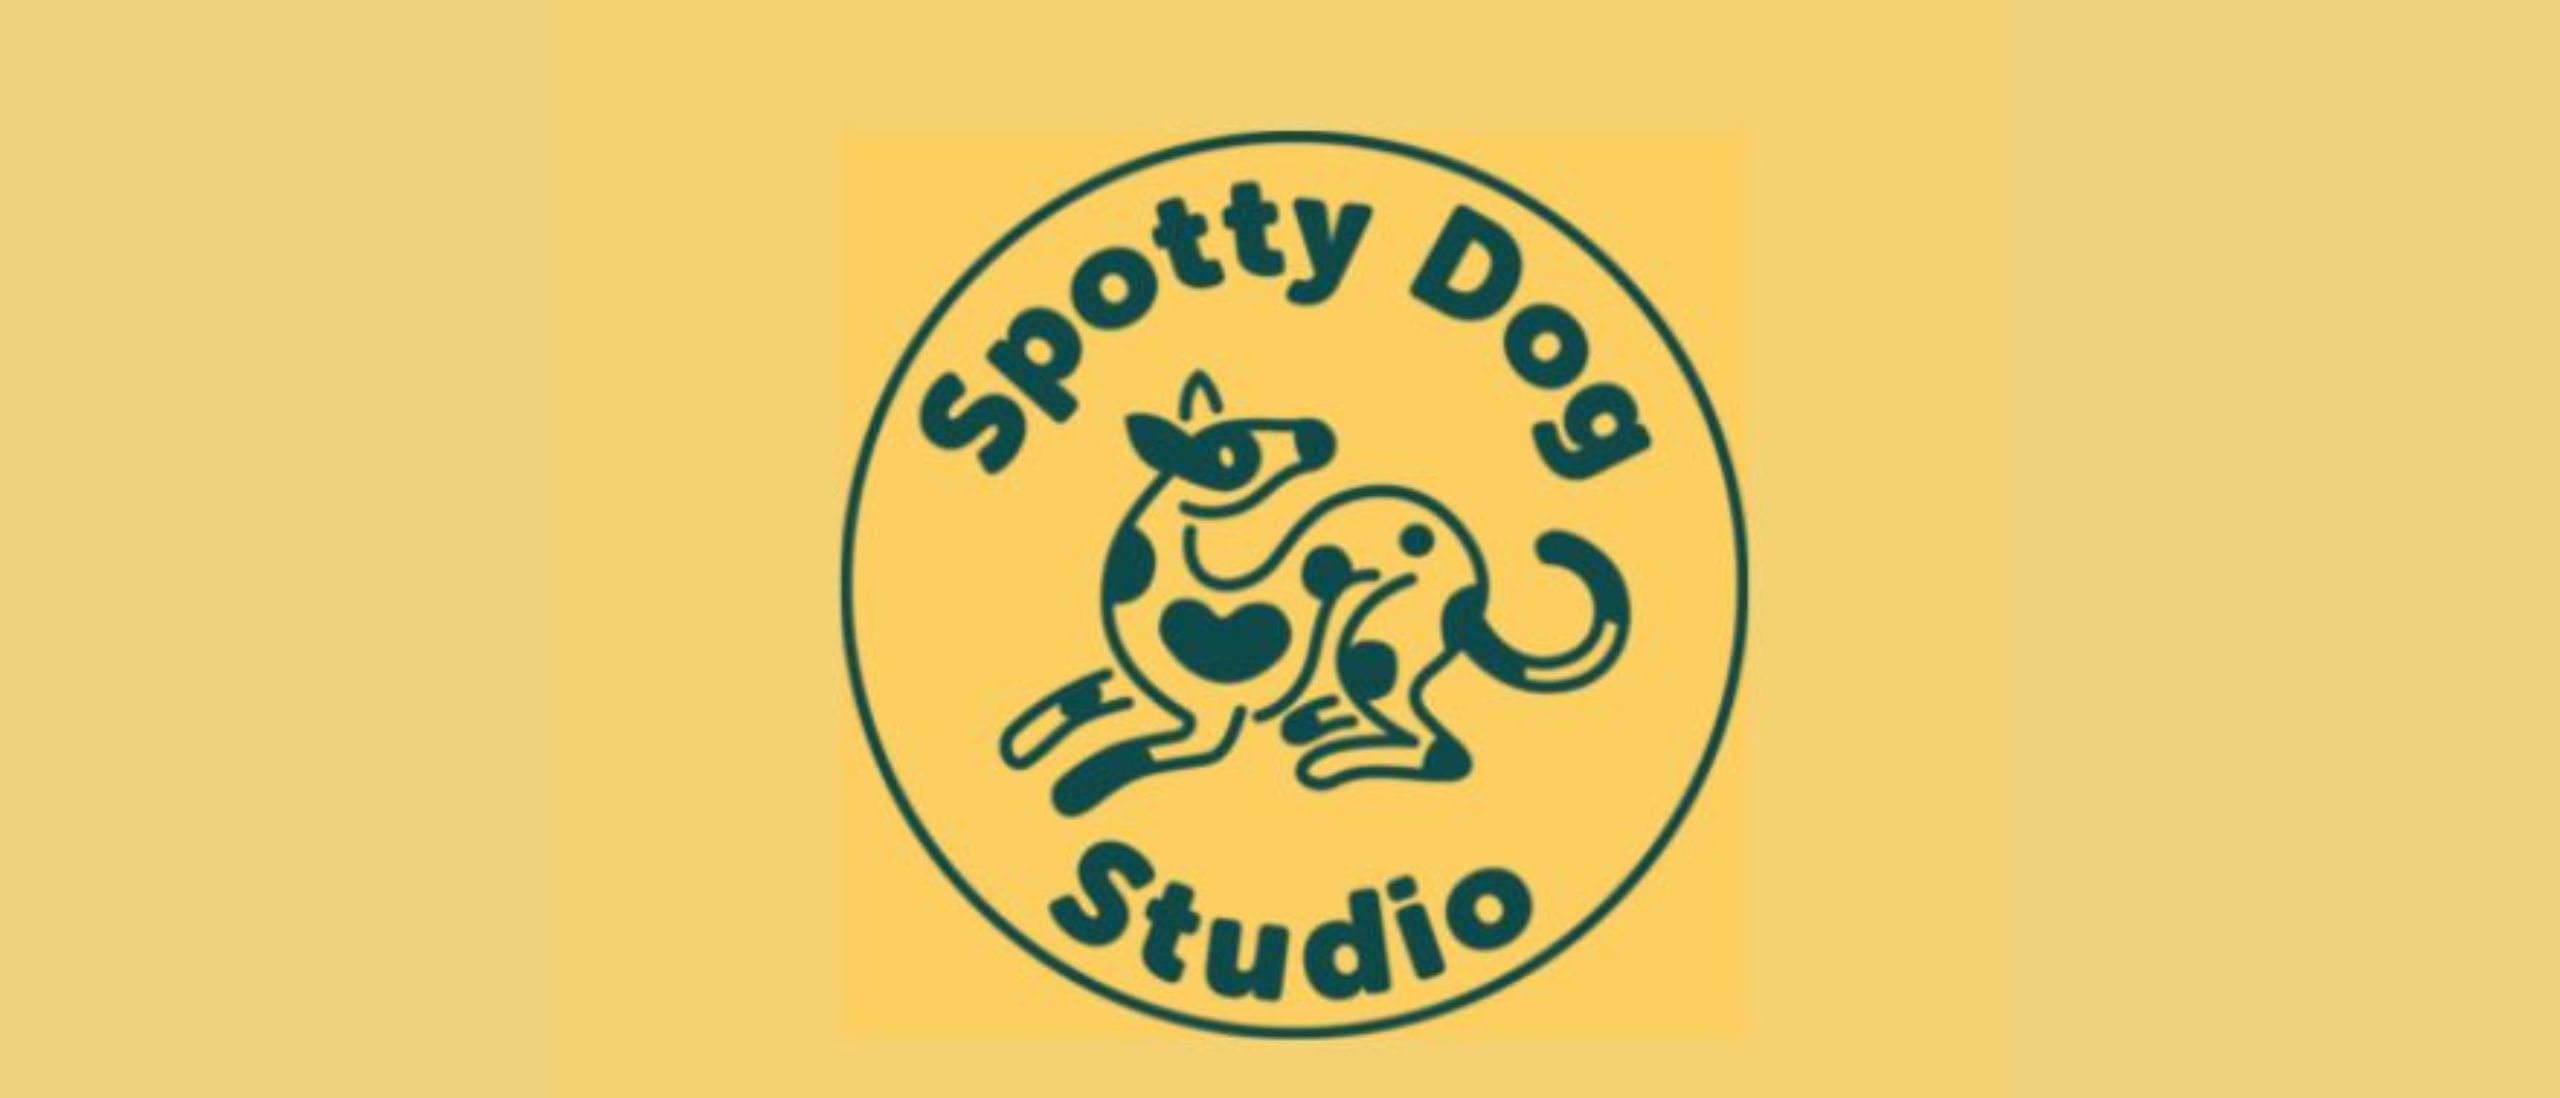 Spotty Dog Studio